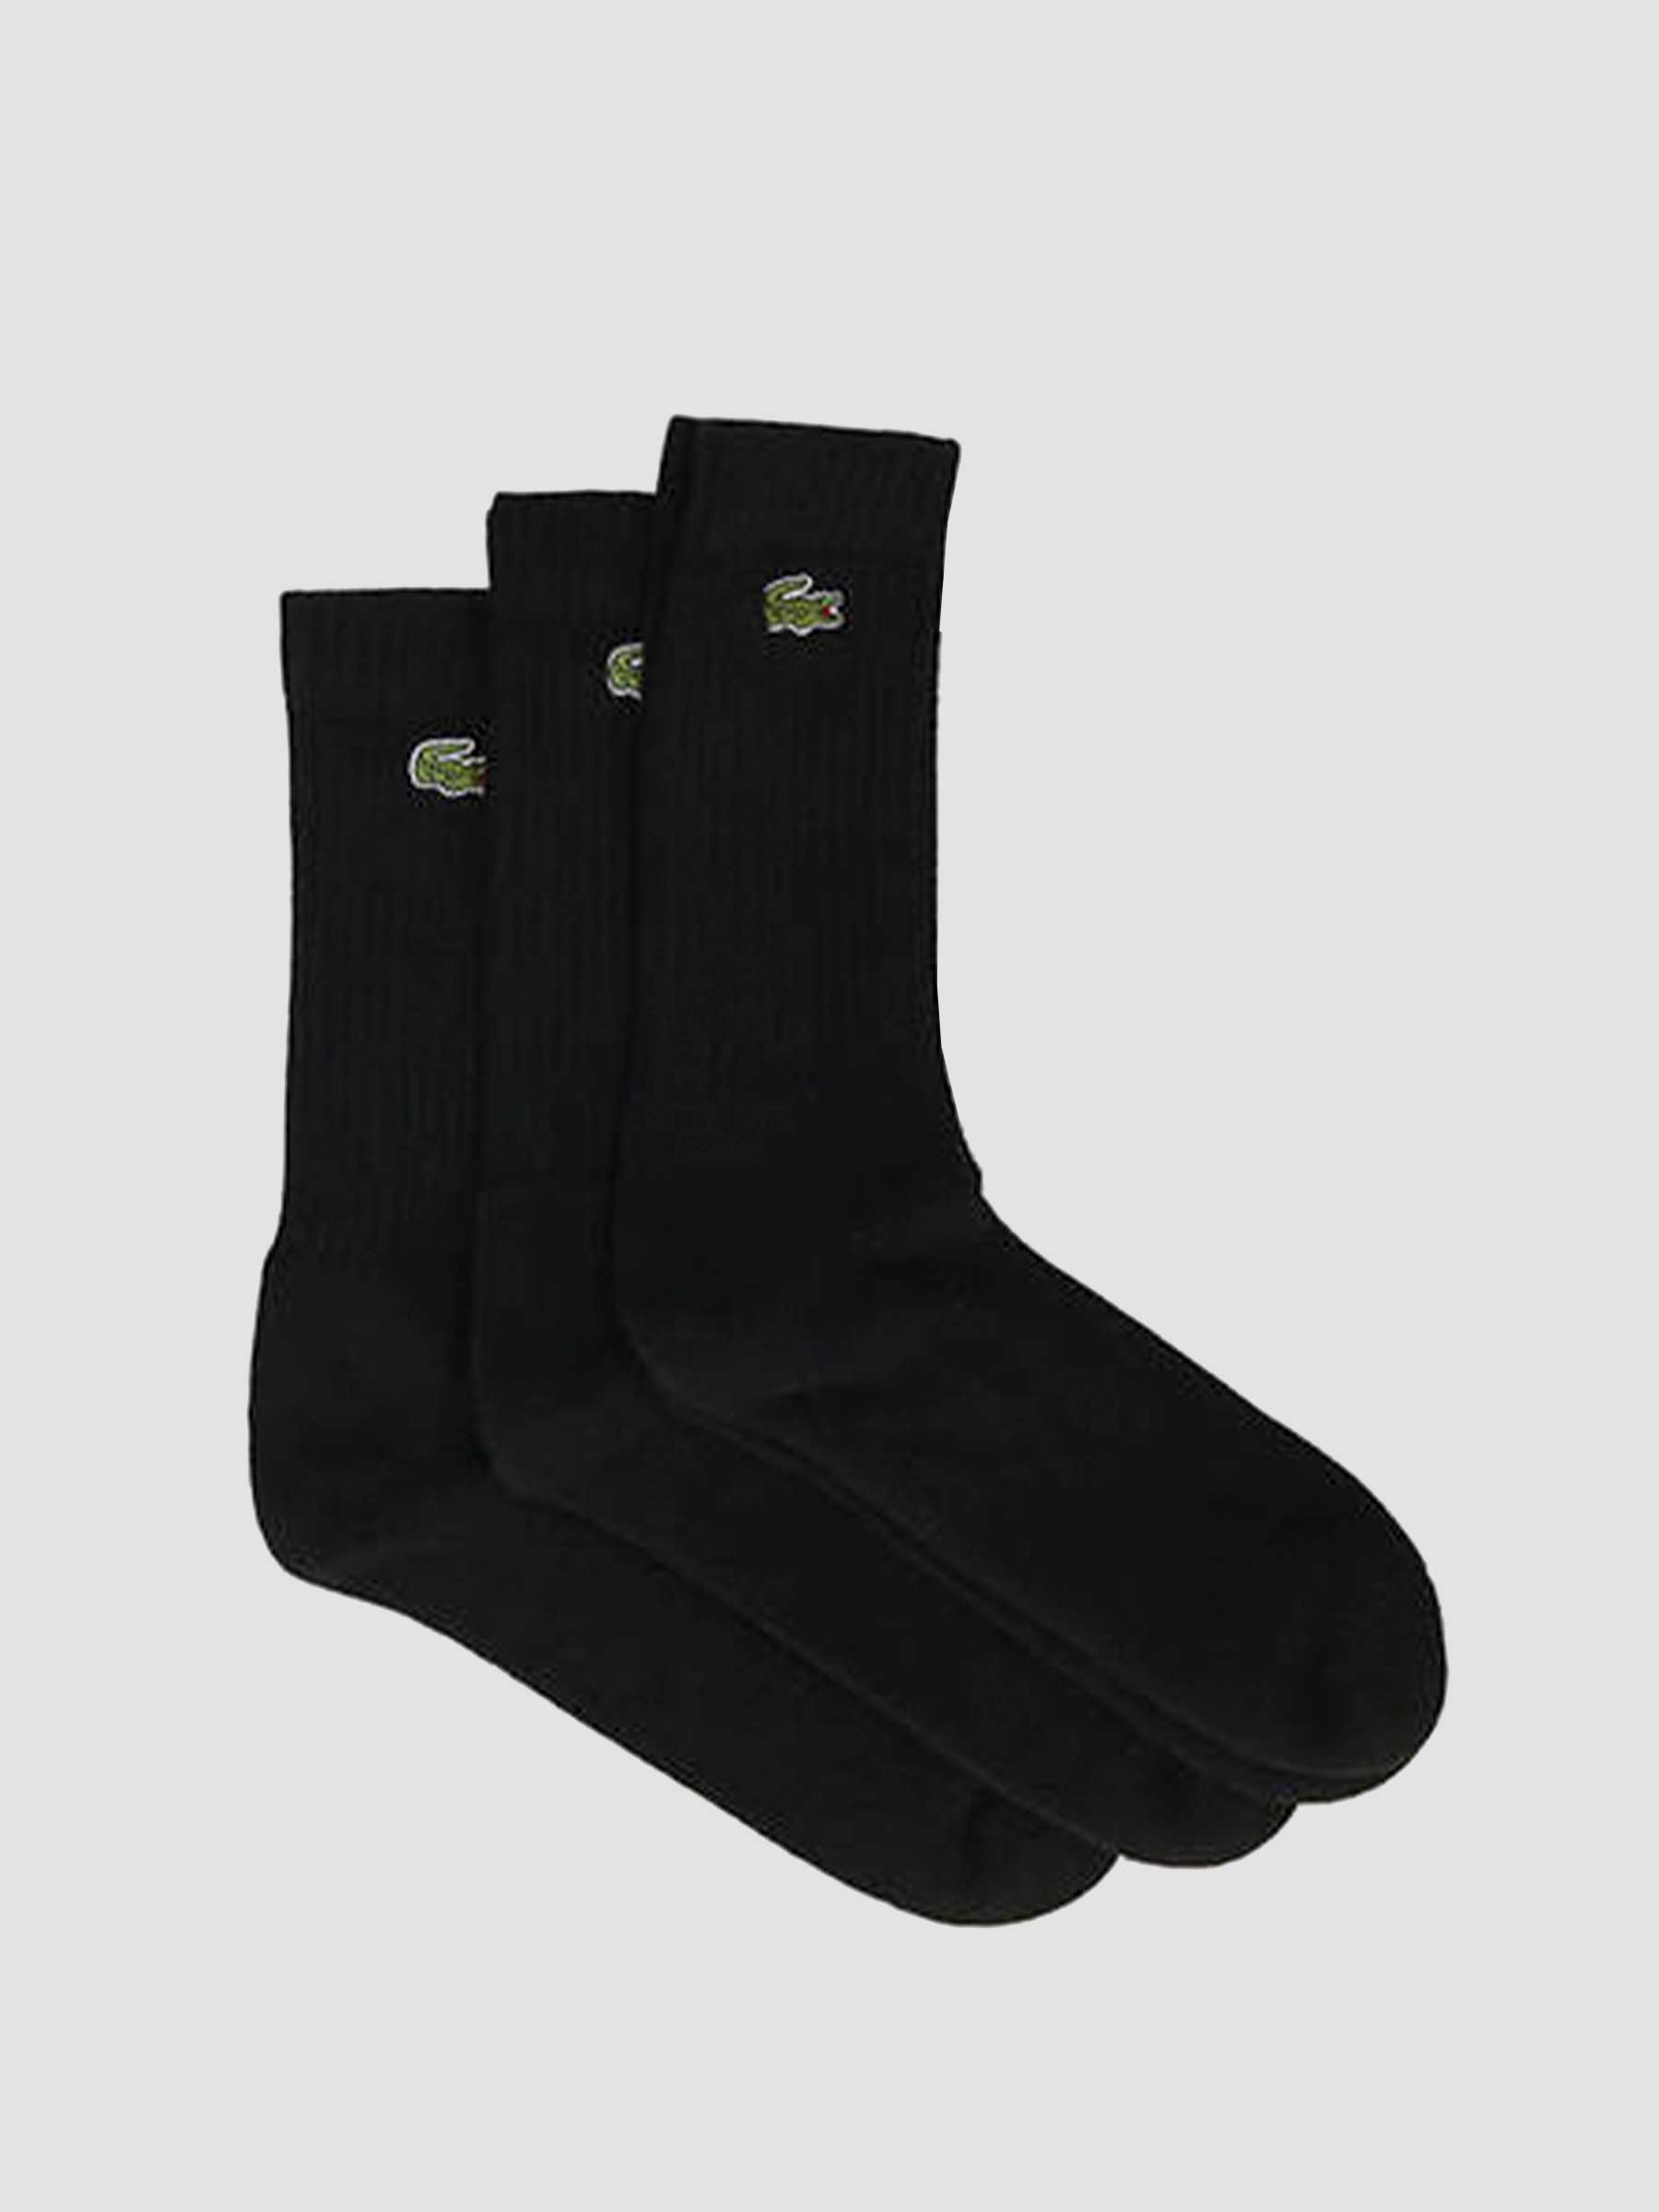 Lacoste 2G1C Socks 06 Black Black-Black RA4182-23 | Freshcotton